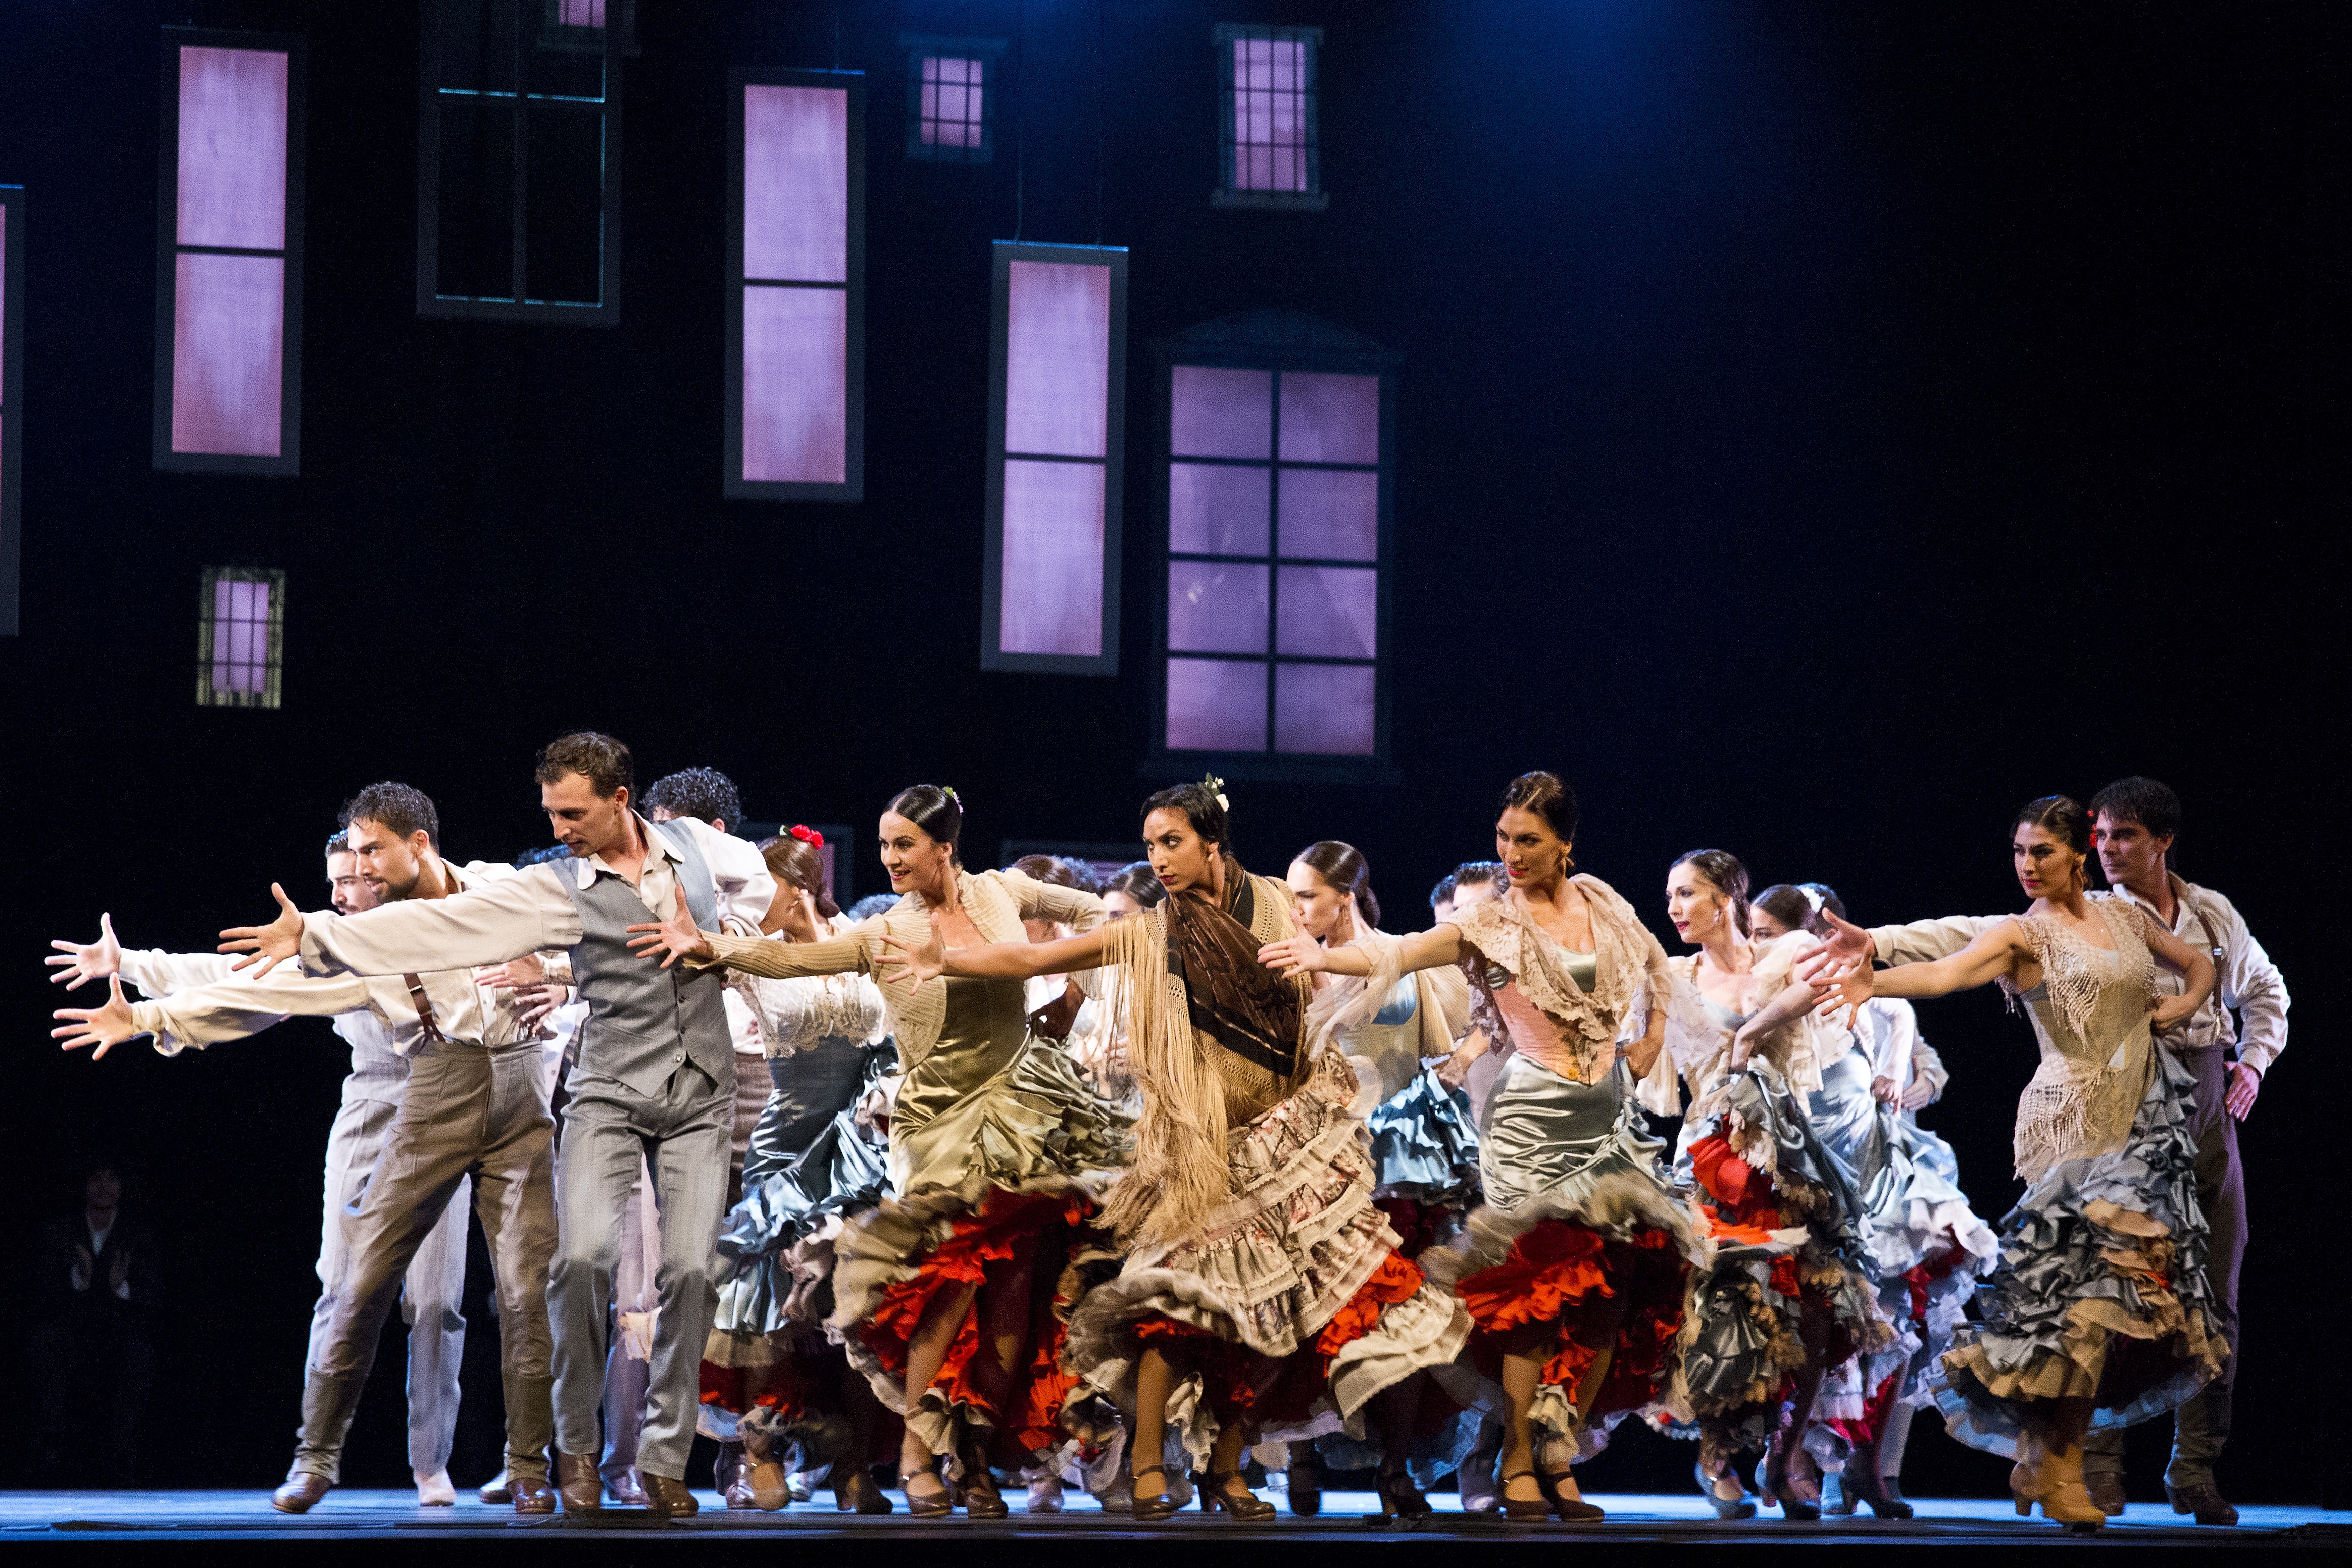 The Spanish national ballet company, Ballet Nacional de España, will be bringing their own fusion dance extravaganza, ‘Zaguán’ y ‘Alento’, to Hong Kong from September 21-23.